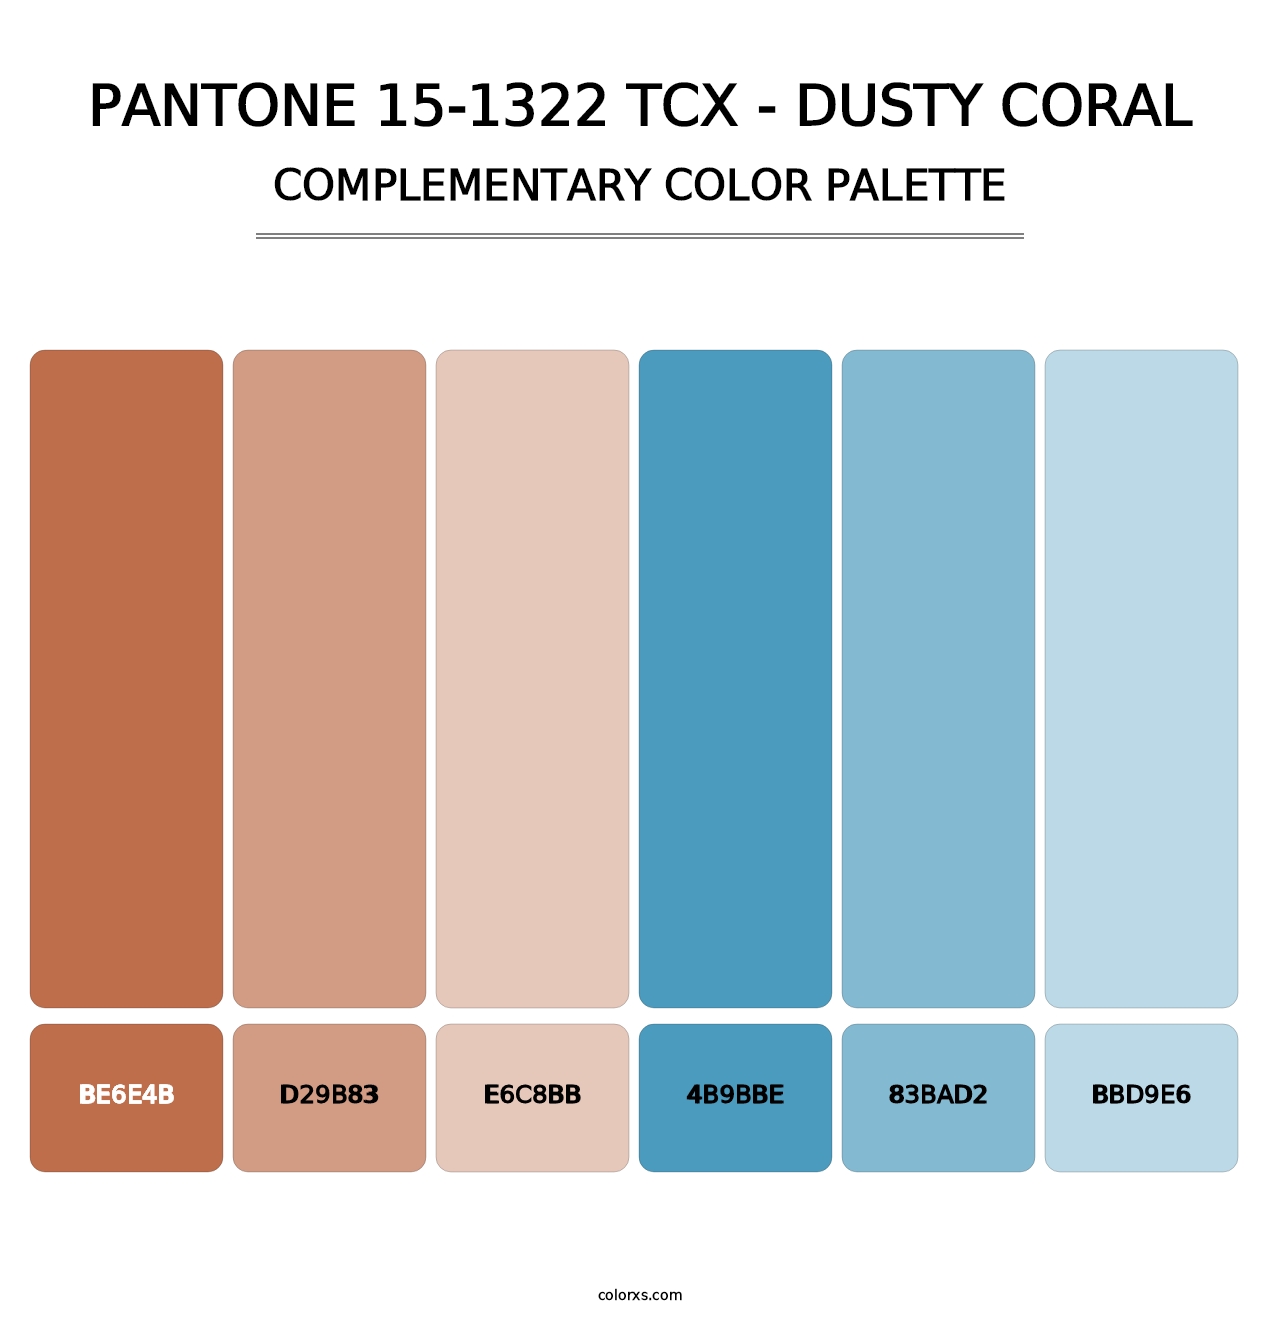 PANTONE 15-1322 TCX - Dusty Coral - Complementary Color Palette